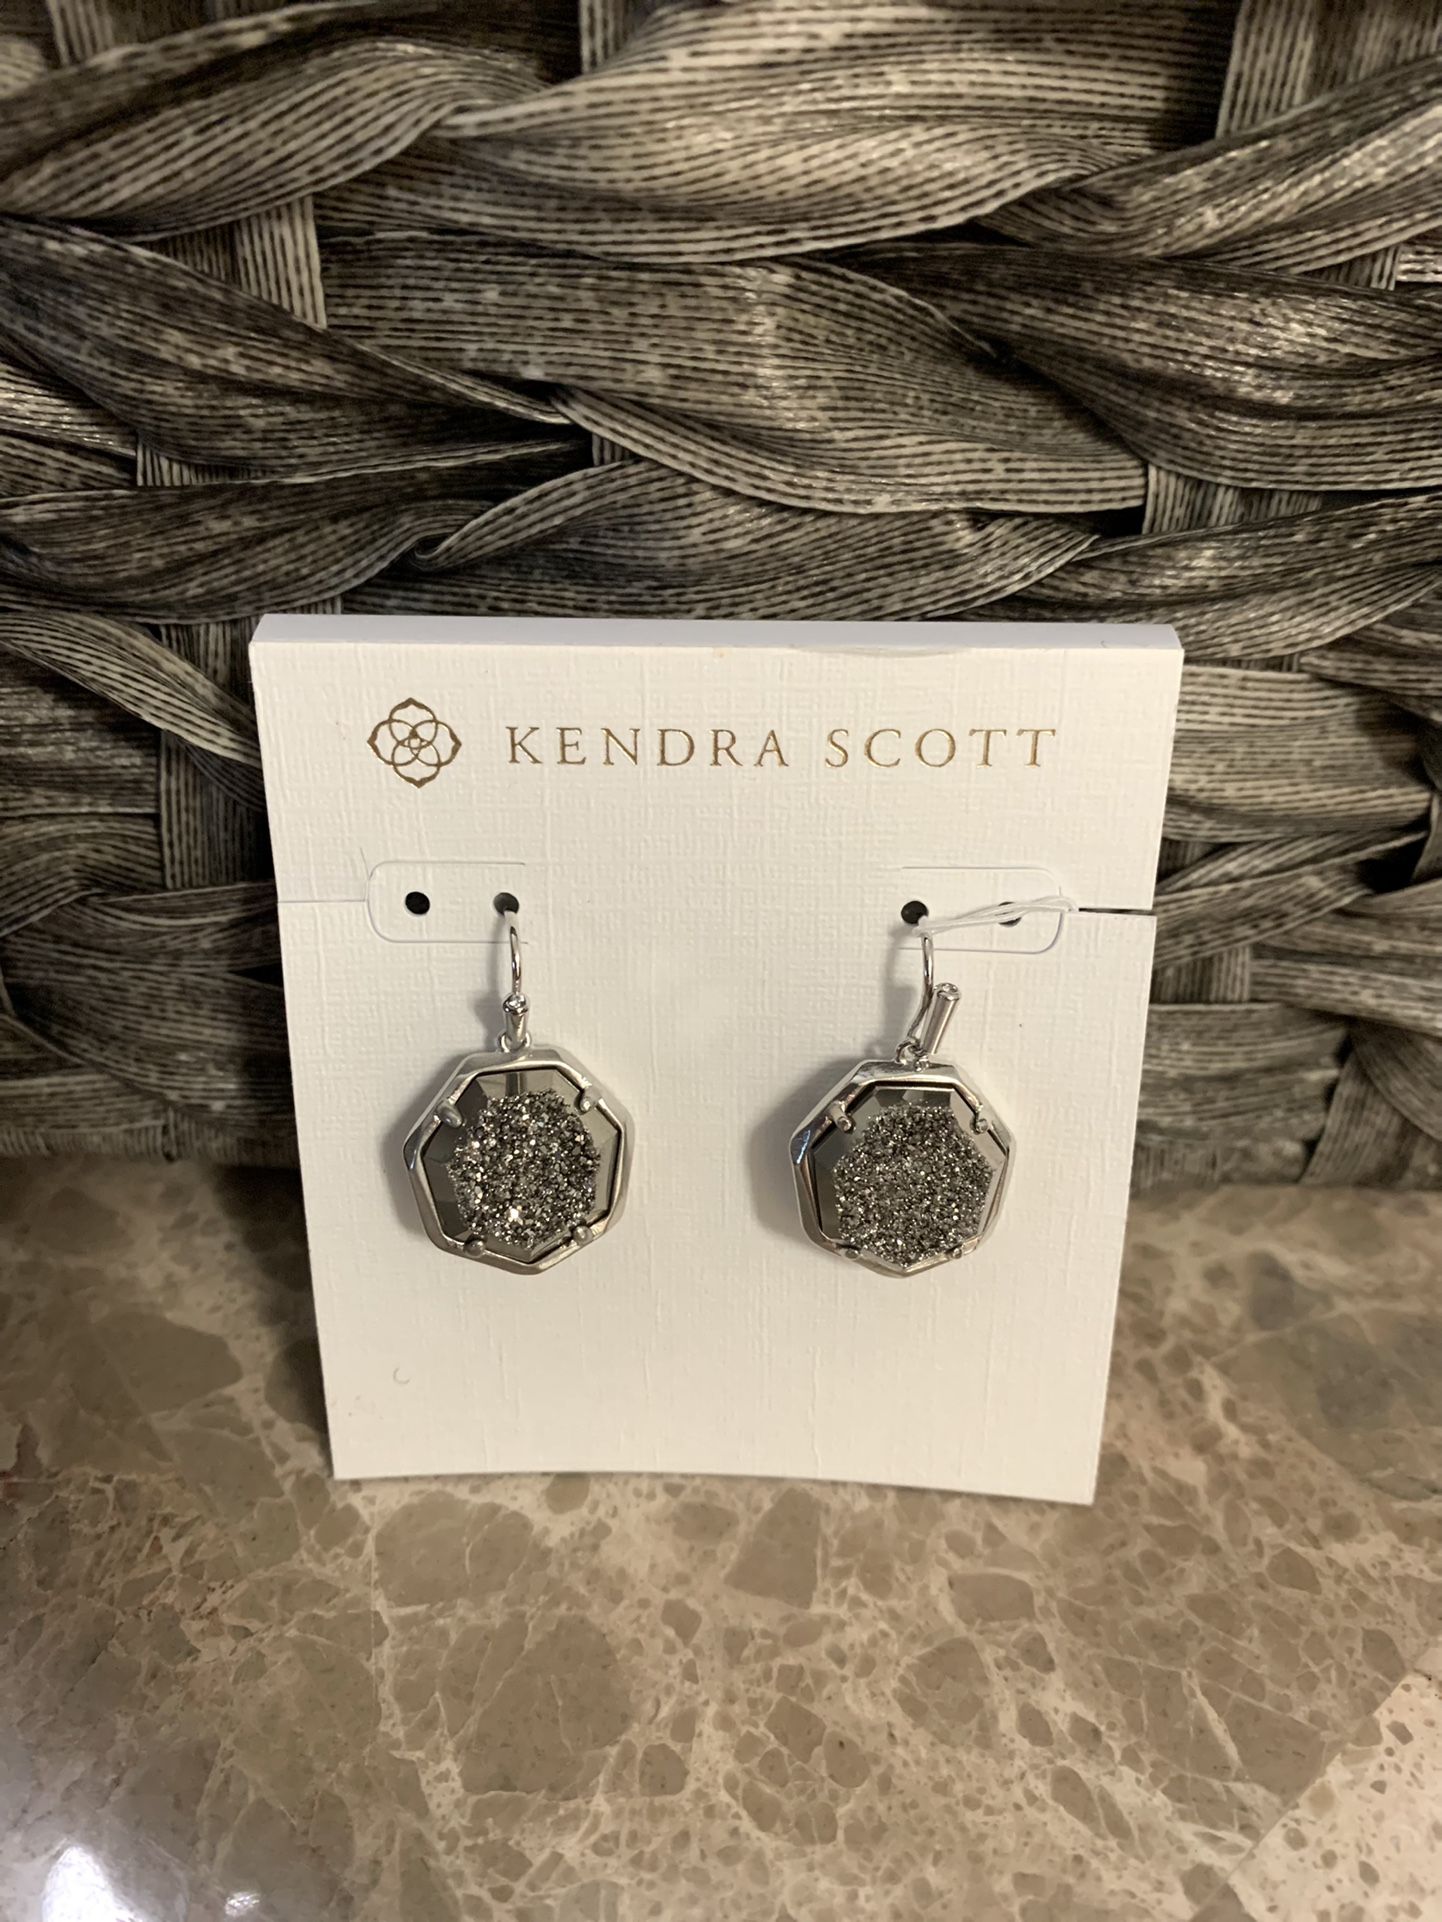 Kendra Scott Lee Sterling Silver Drop Earrings in Platinum Drusy 